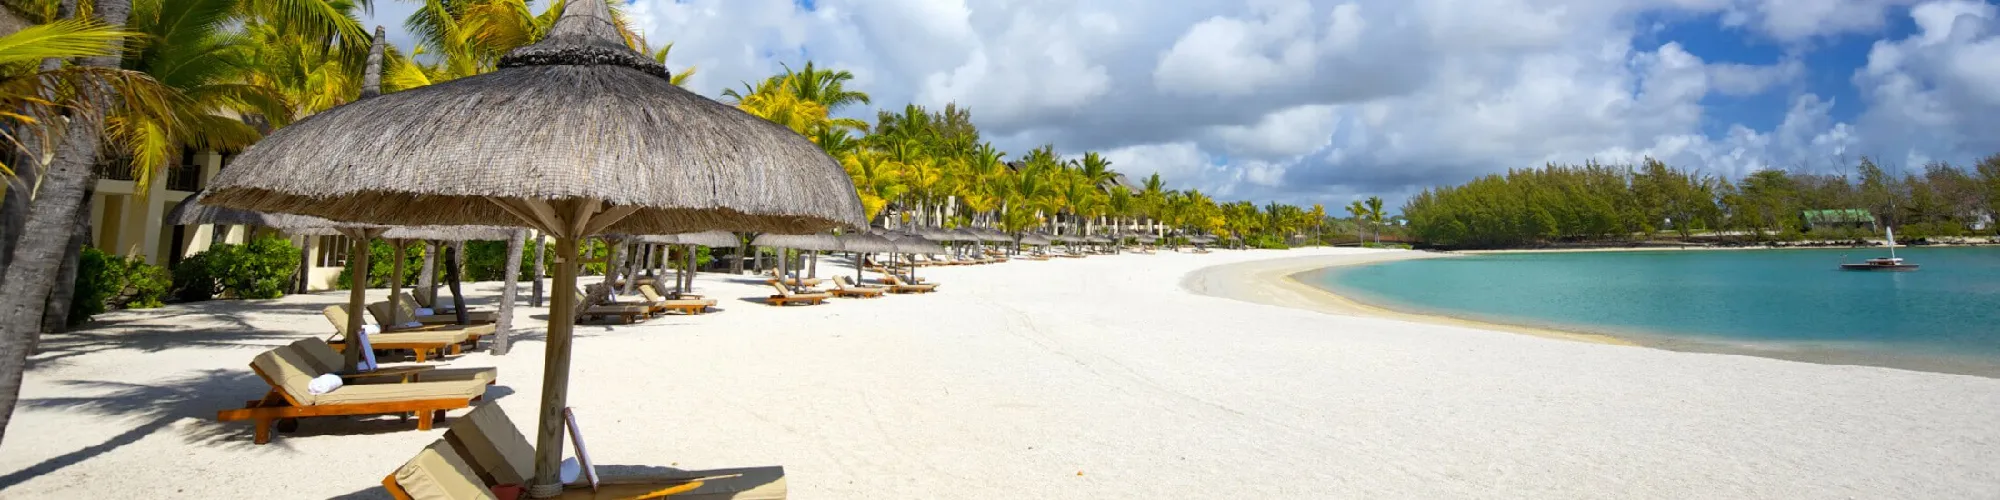 Traumreisen nach Mauritius background image